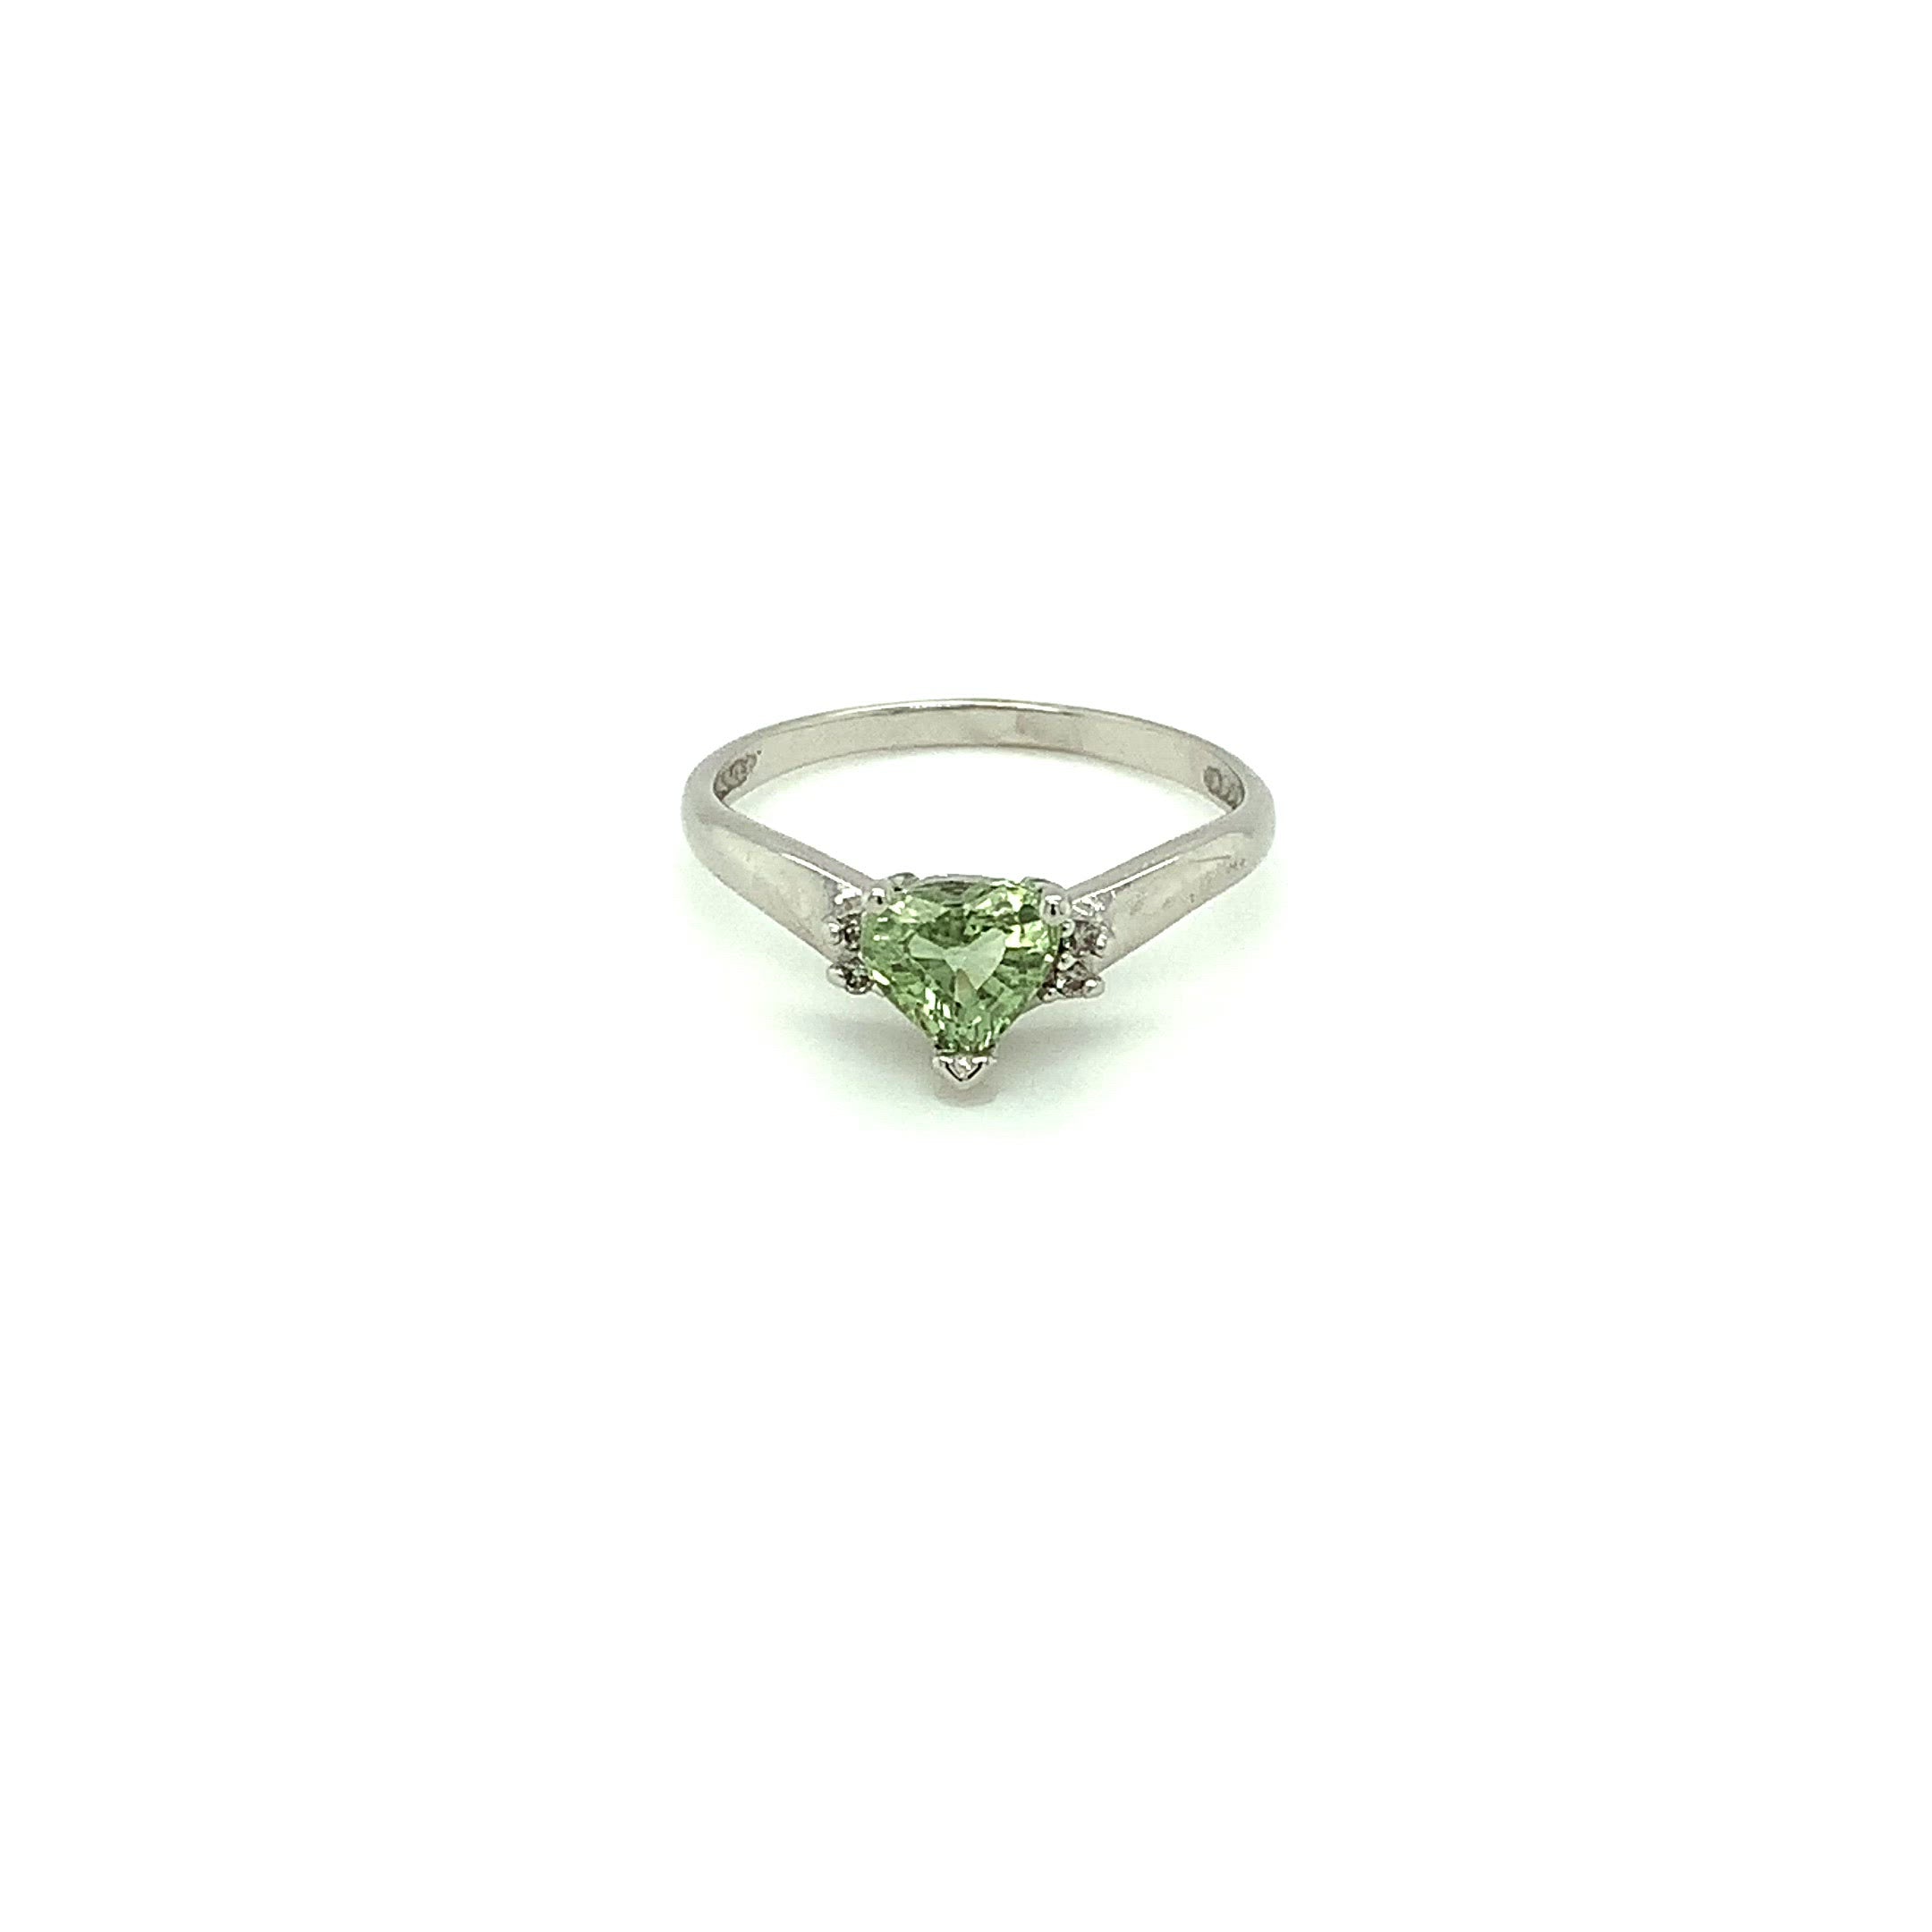 Natural Merelani Mint Garnet & Diamond Ring 14K Solid White Gold 1.14tcw Heart Ring Engagement Ring Wedding Ring Green Ring Bridal Jewelry